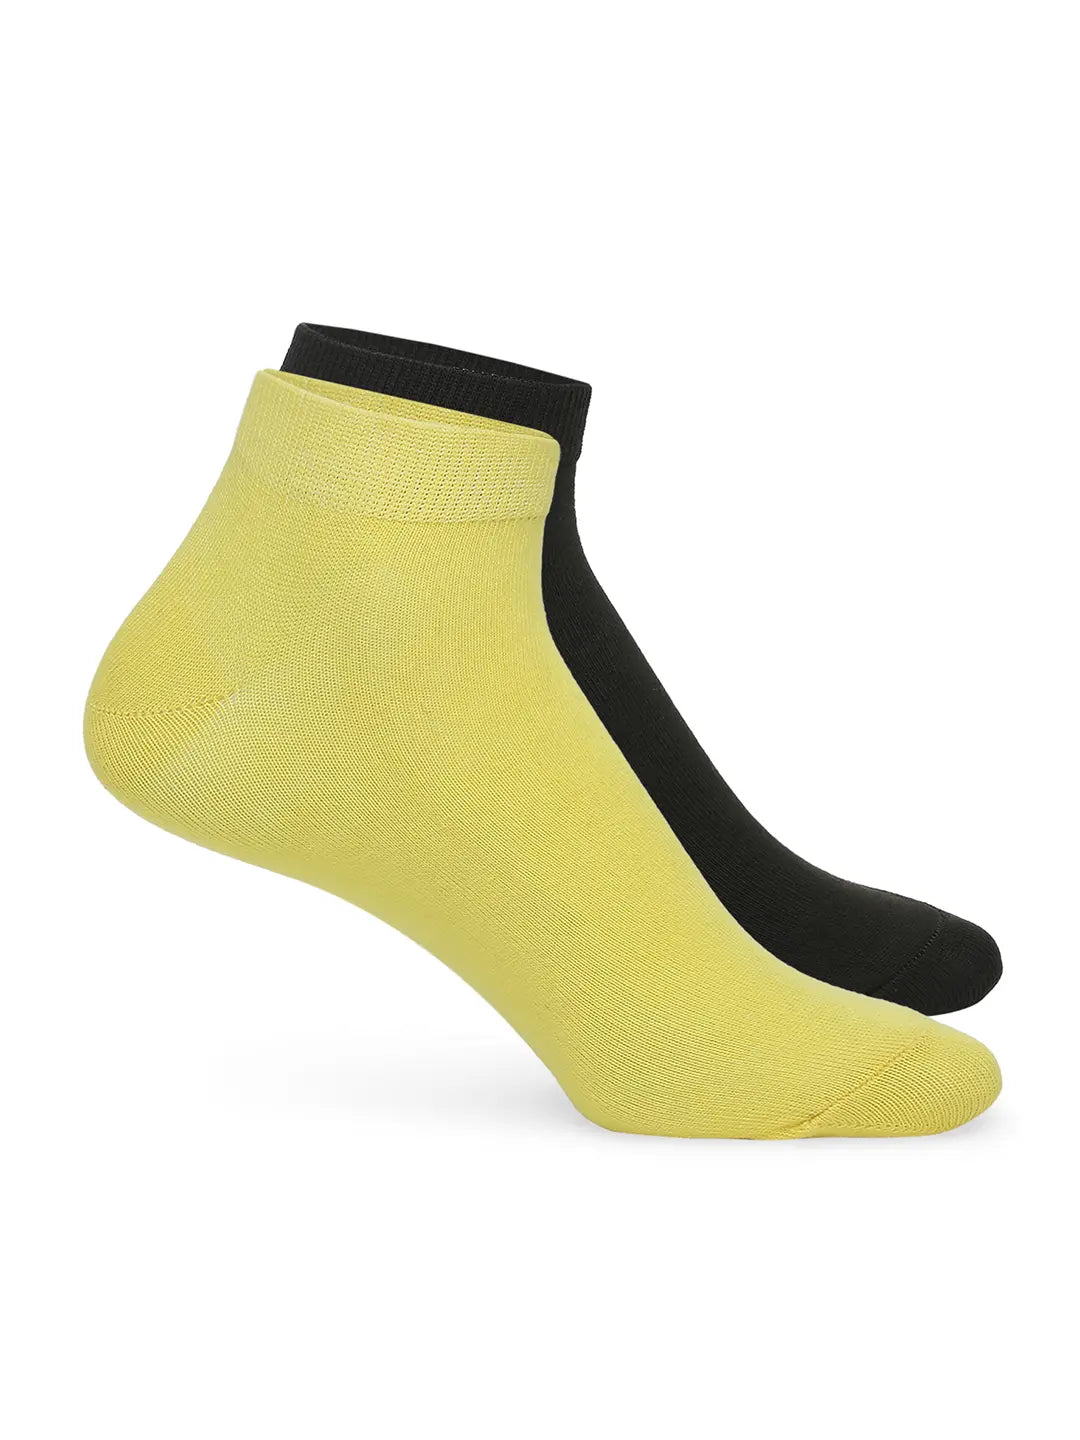 Men Olive & Yellow Cotton Blend Sneaker Socks - Pack Of 2 - Underjeans by Spykar